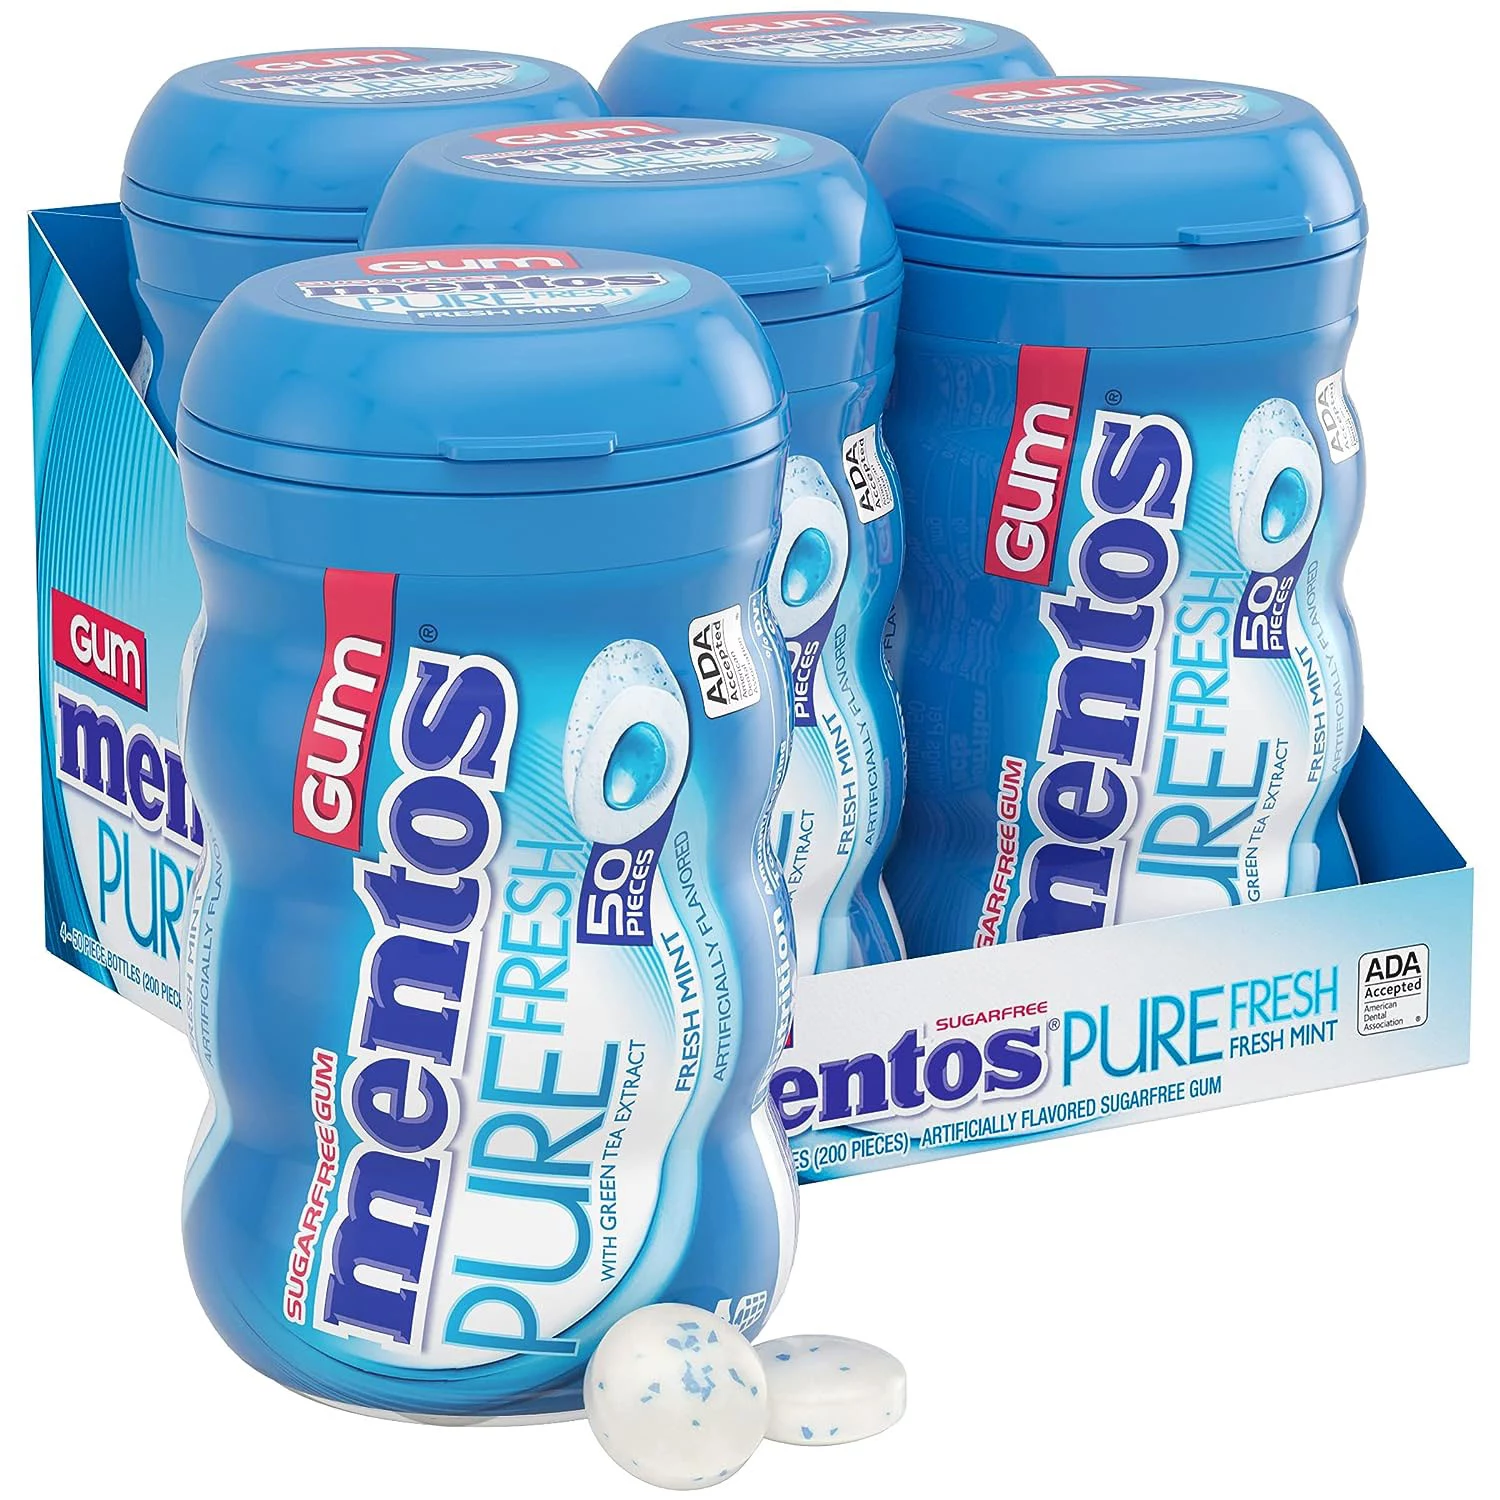 Mentos Pure Fresh Sugar-Free Chewing Gum